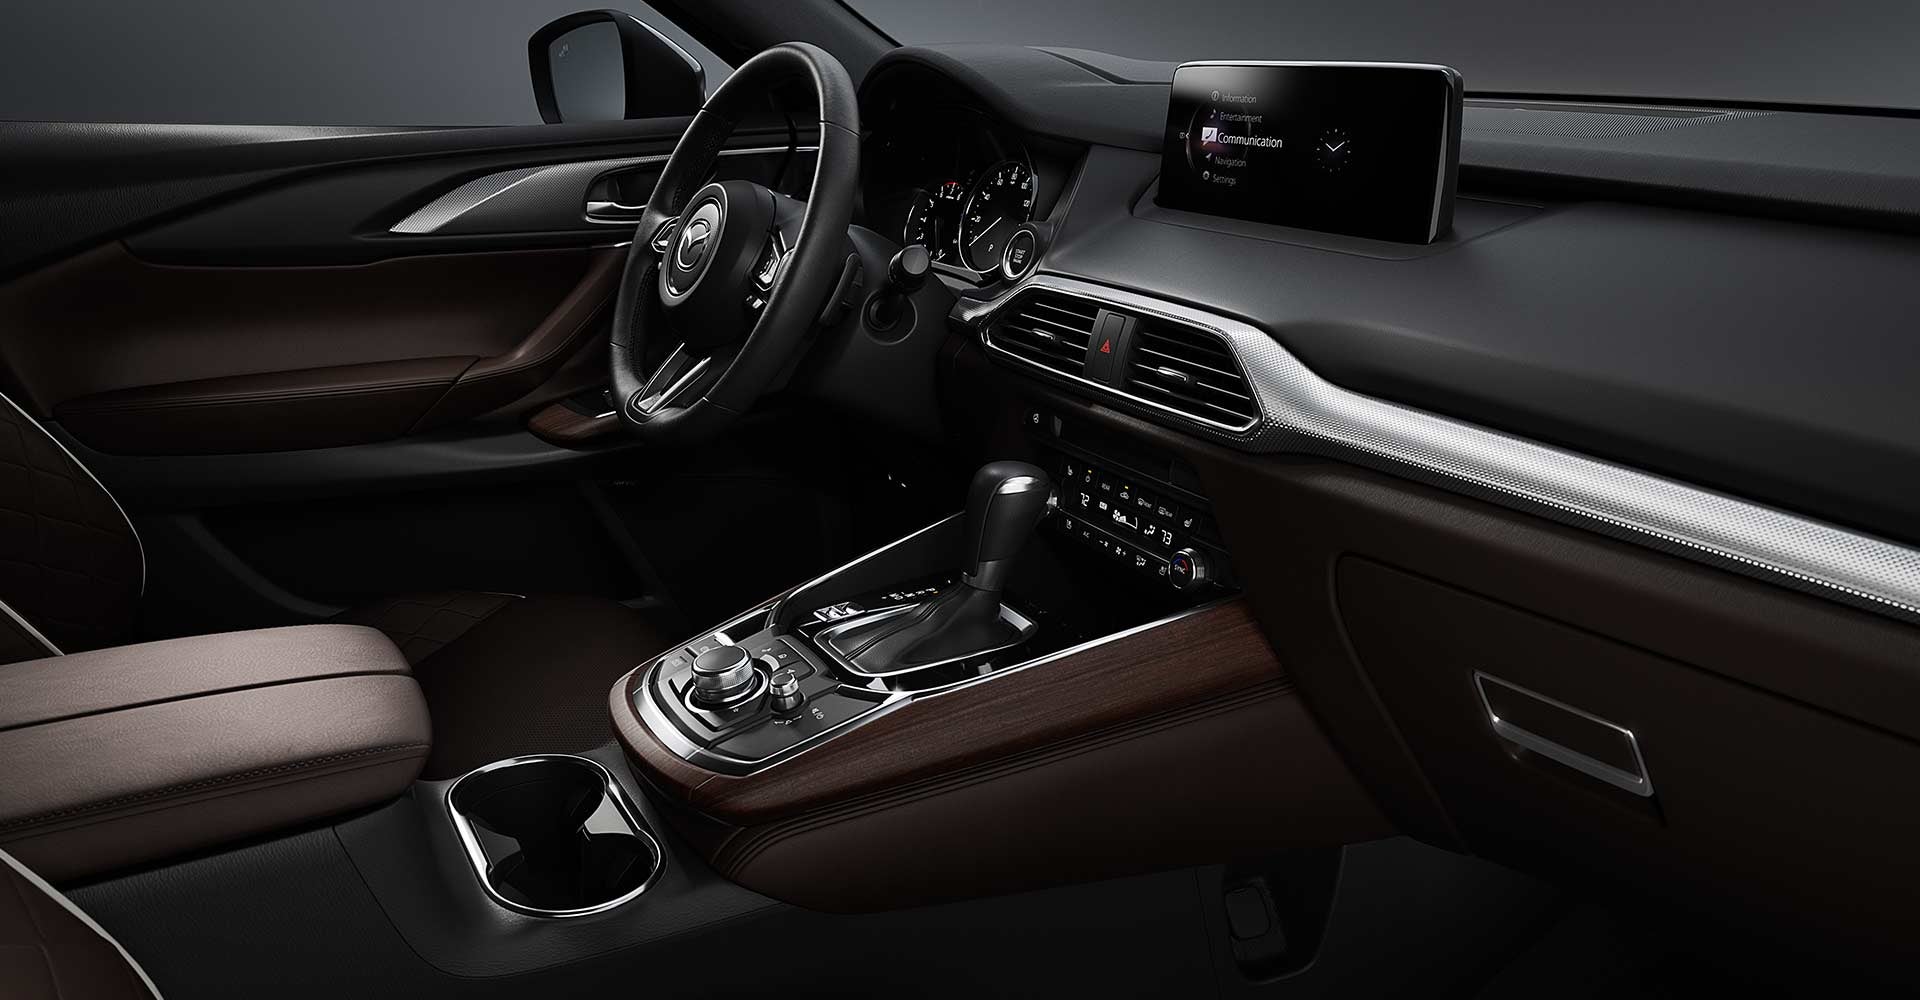 2022 Mazda CX9 Easton, MD Interior, MPG & Towing Capacity